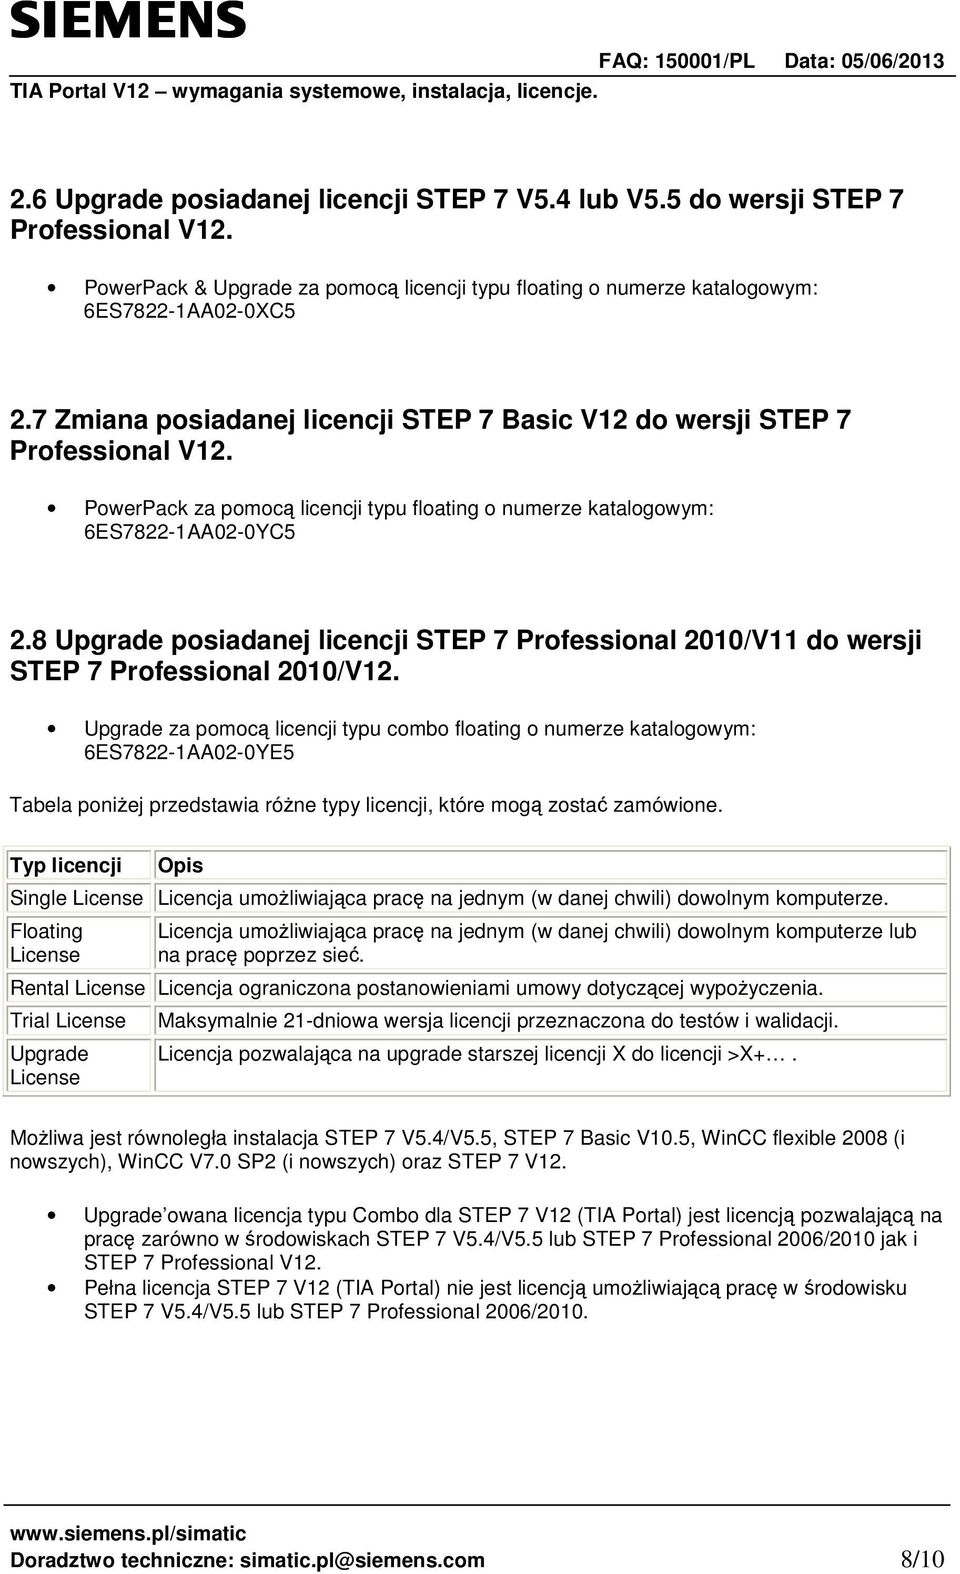 8 Upgrade posiadanej licencji STEP 7 Professional 2010/V11 do wersji STEP 7 Professional 2010/V12.